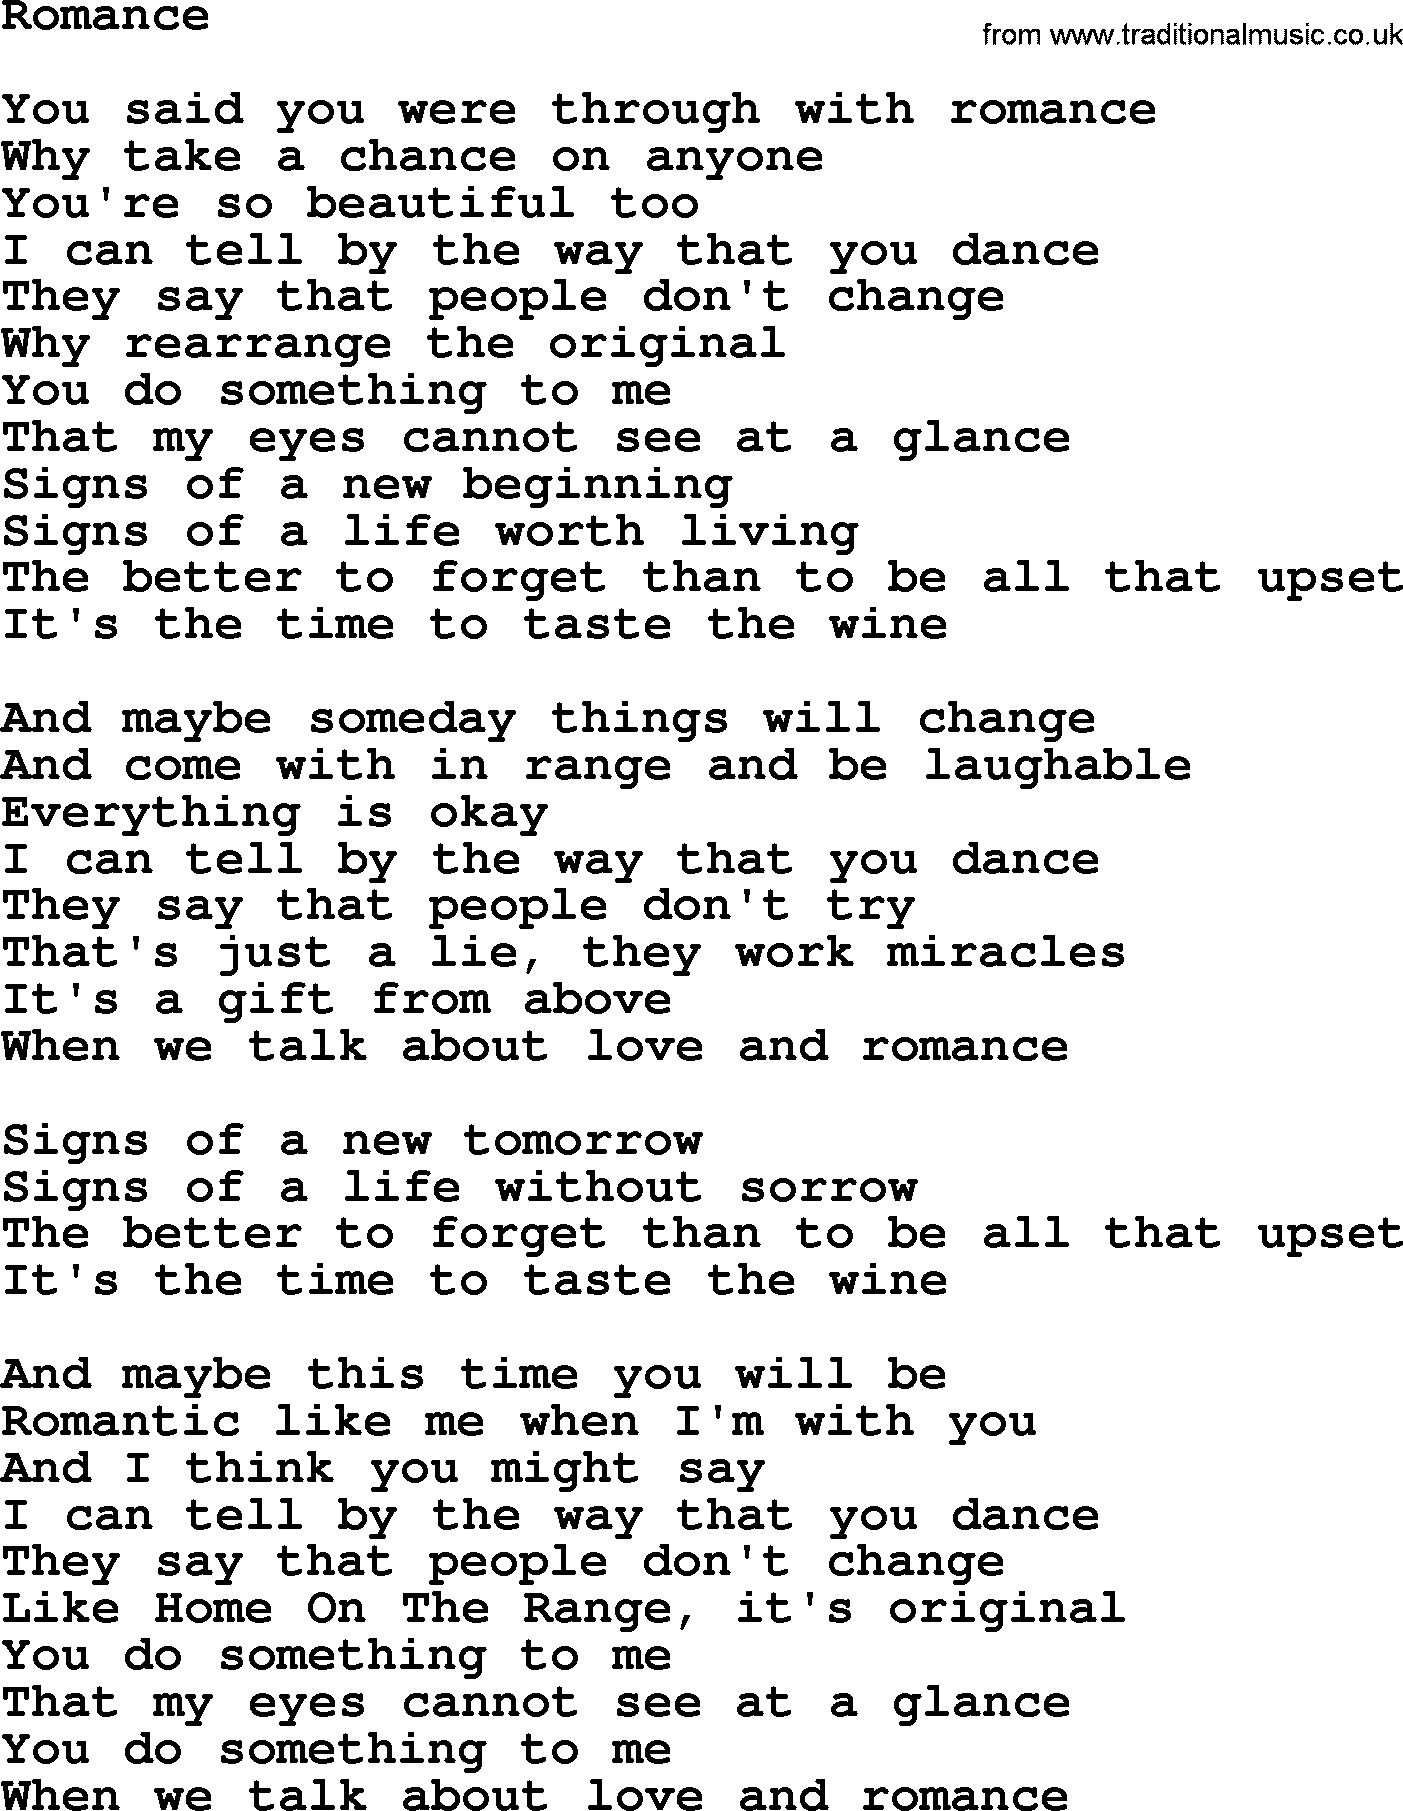 Gordon Lightfoot song Romance, lyrics